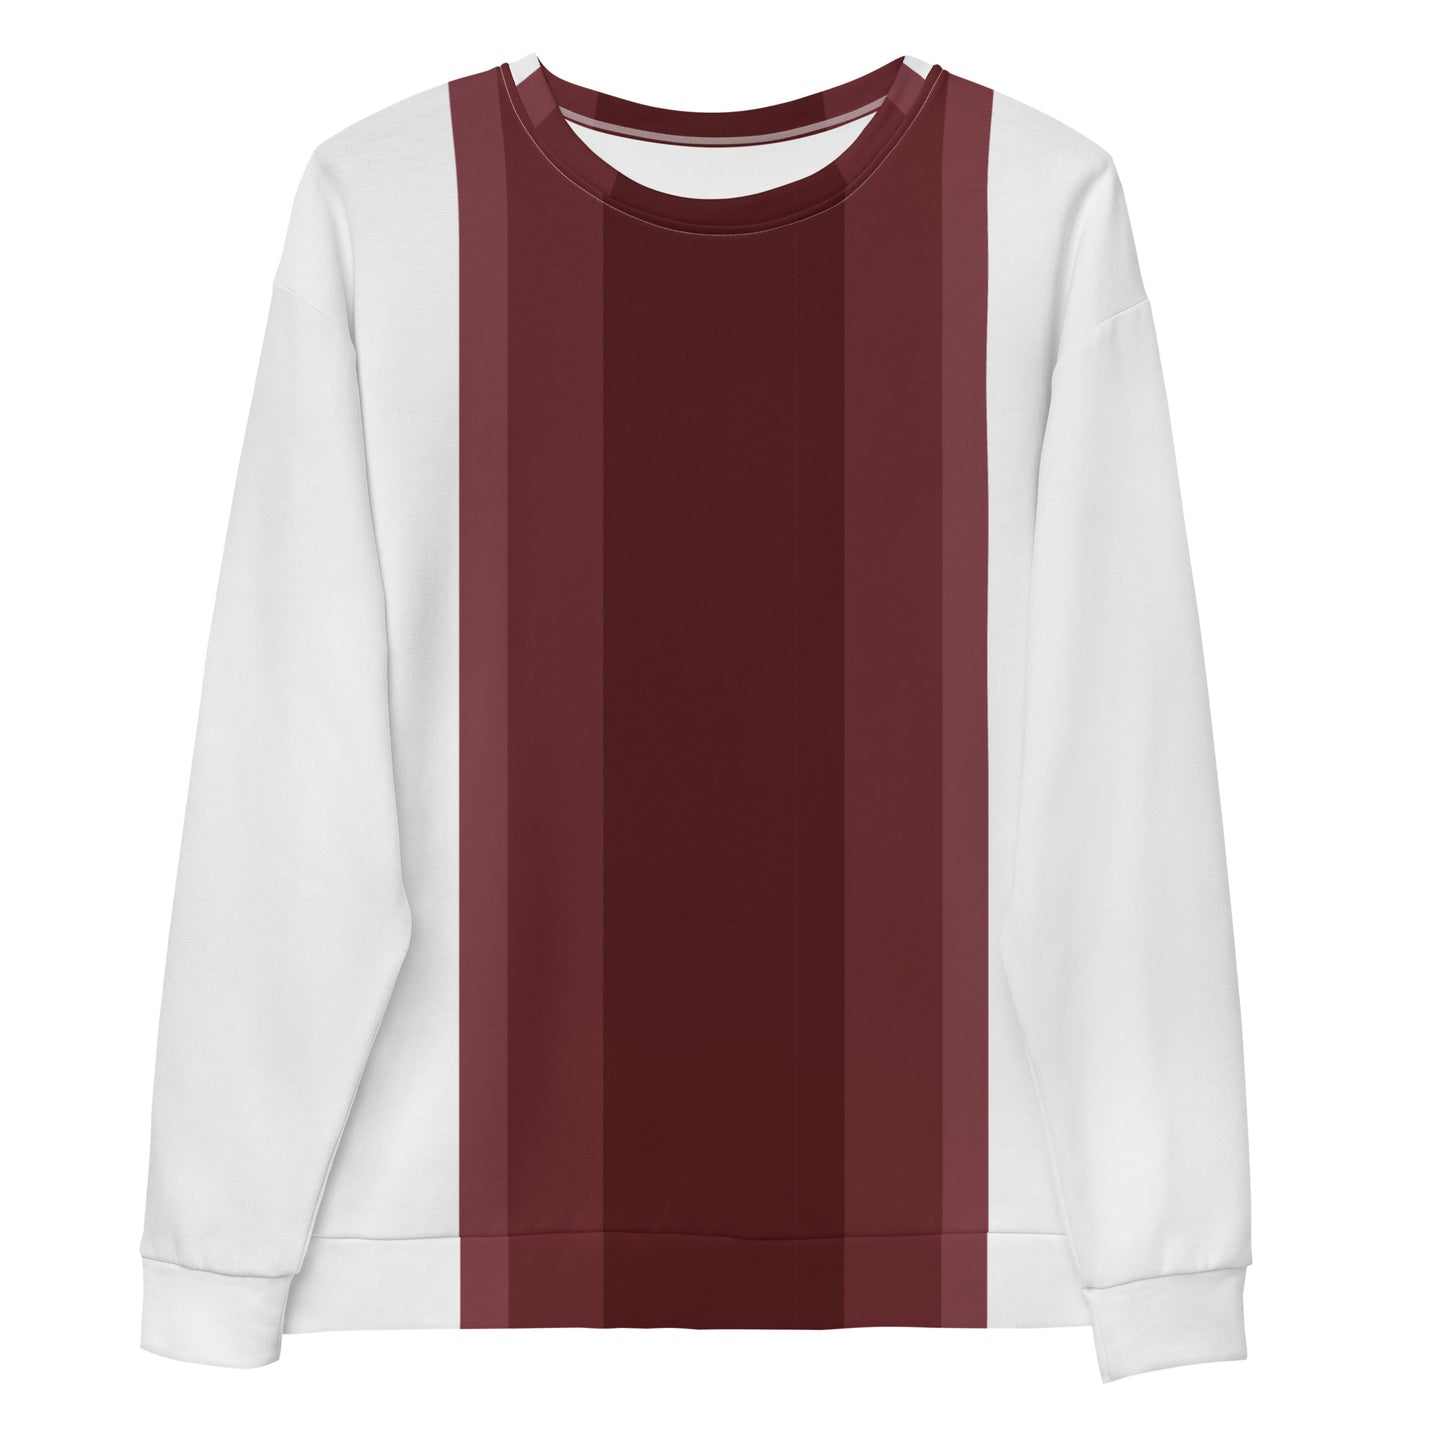 Vertical Lines Maroon Block - Sustainably Made Sweatshirt